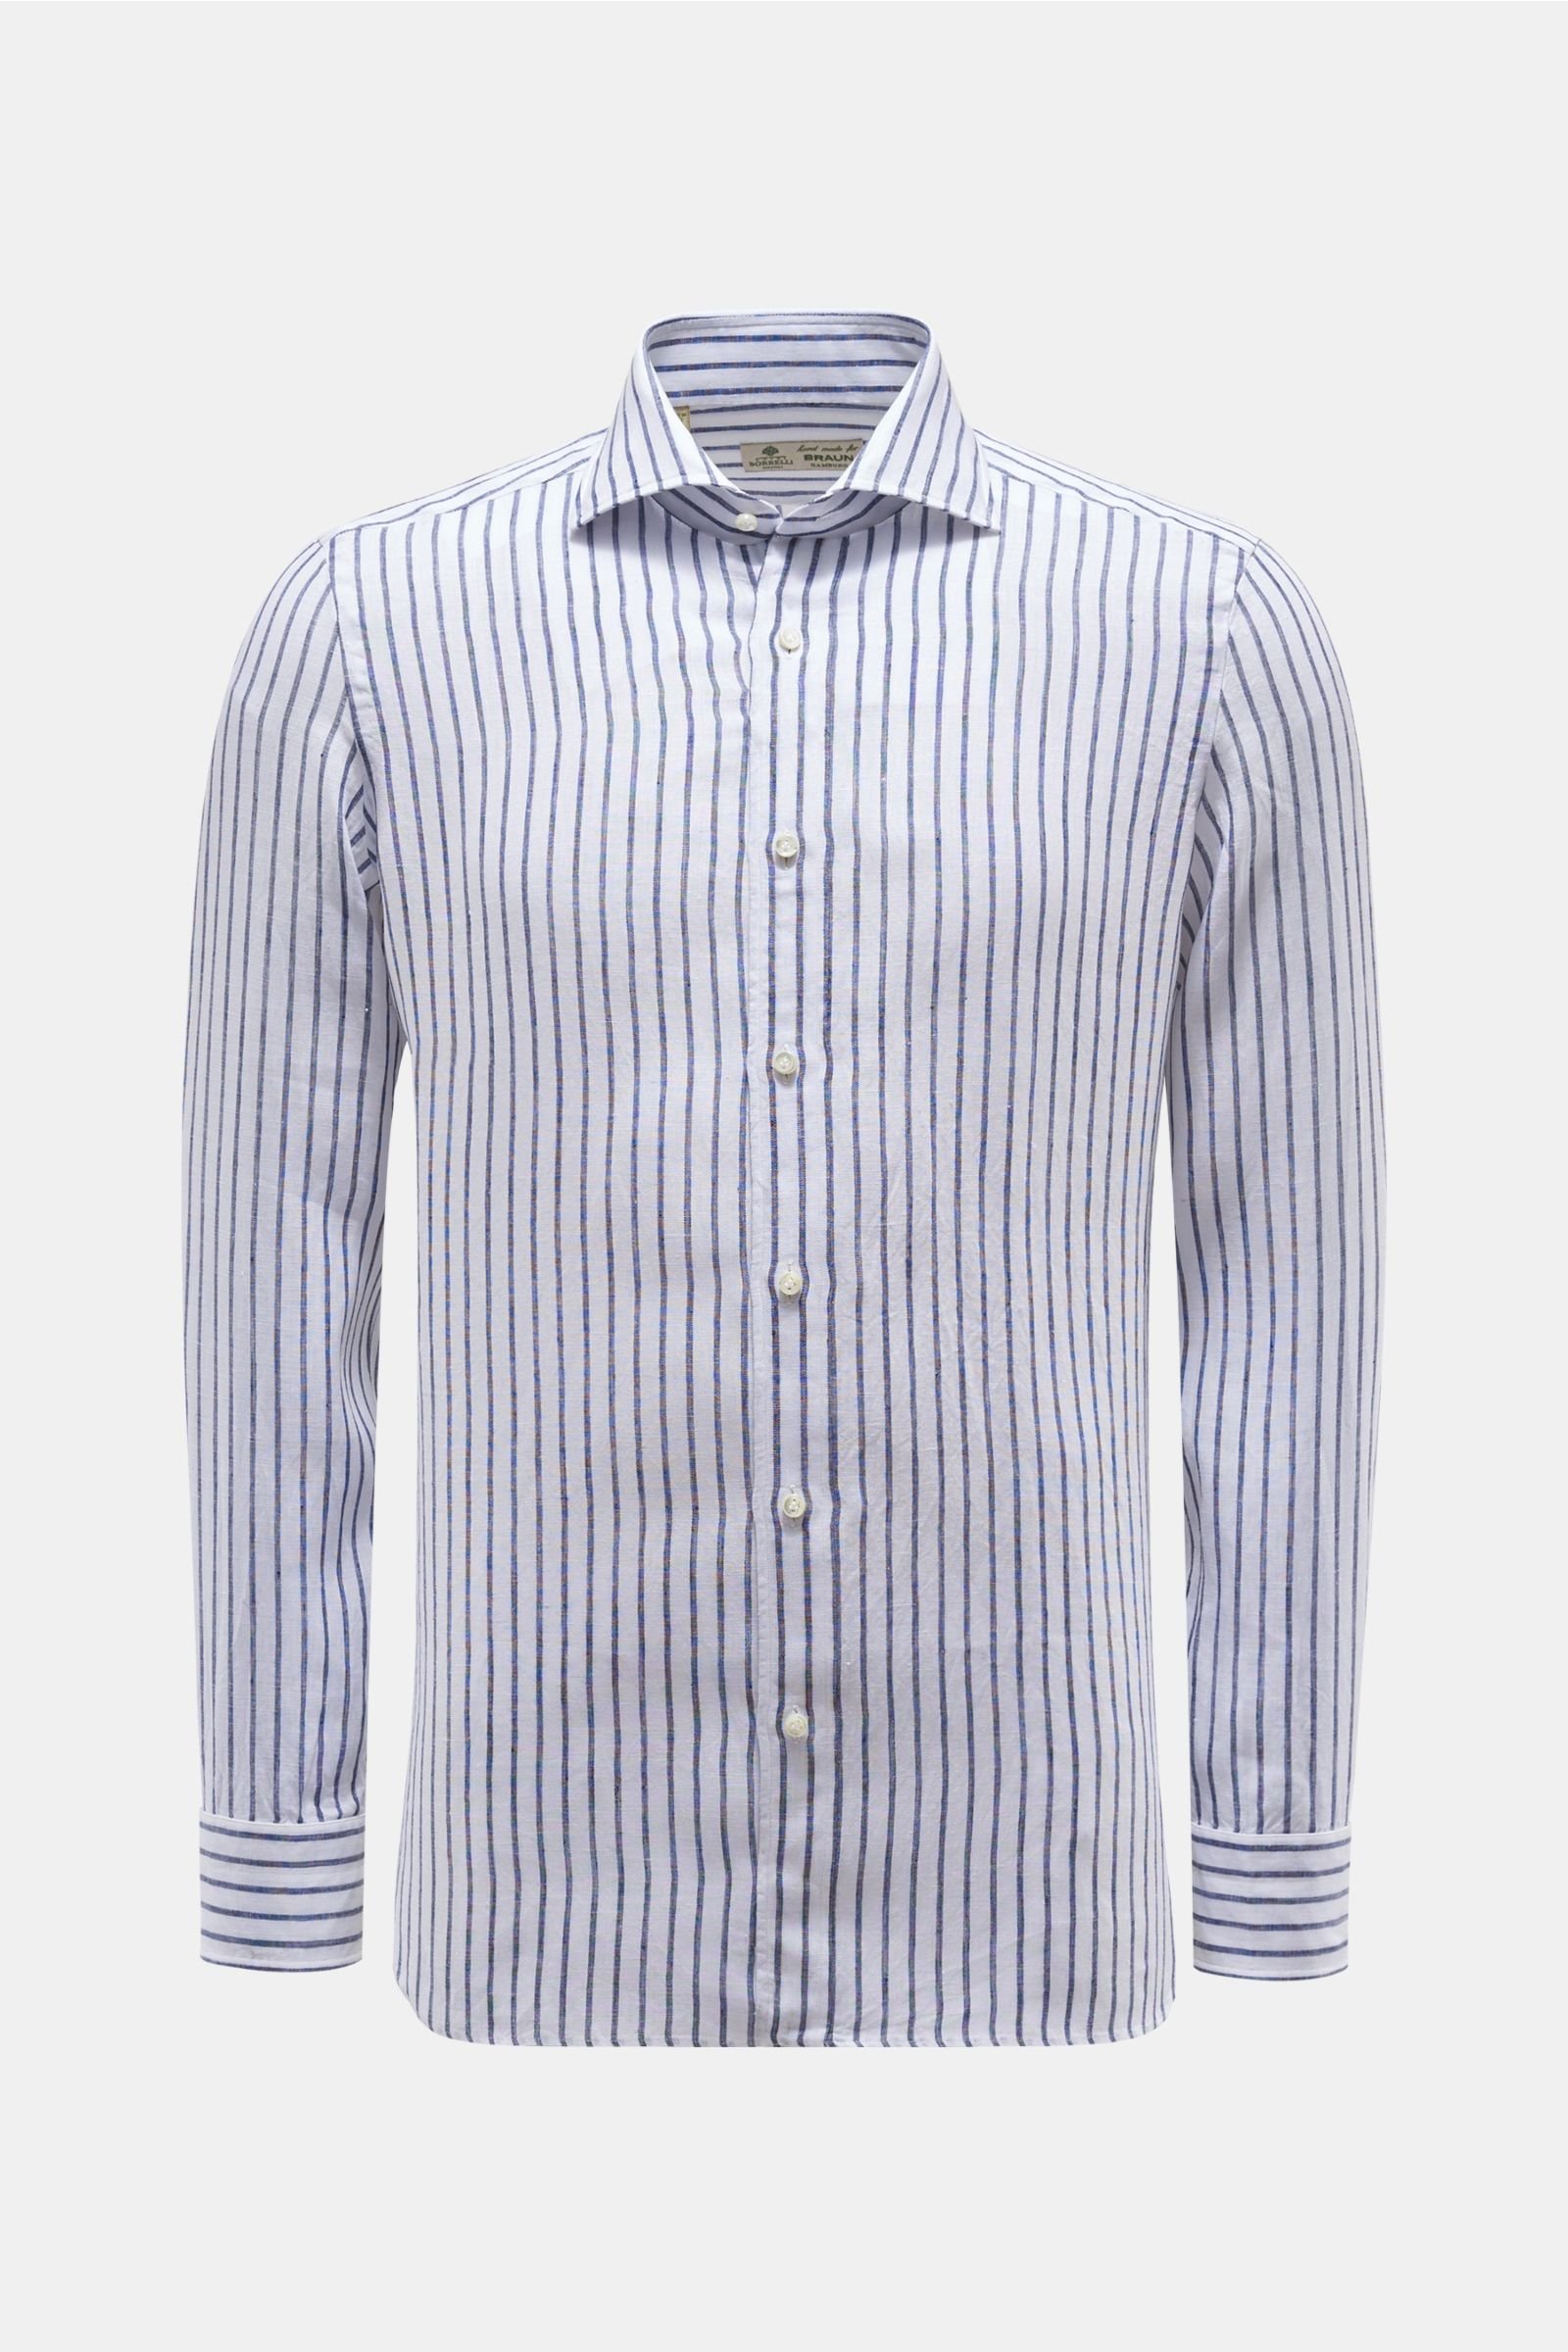 Linen shirt 'Ettore' shark collar navy/white striped